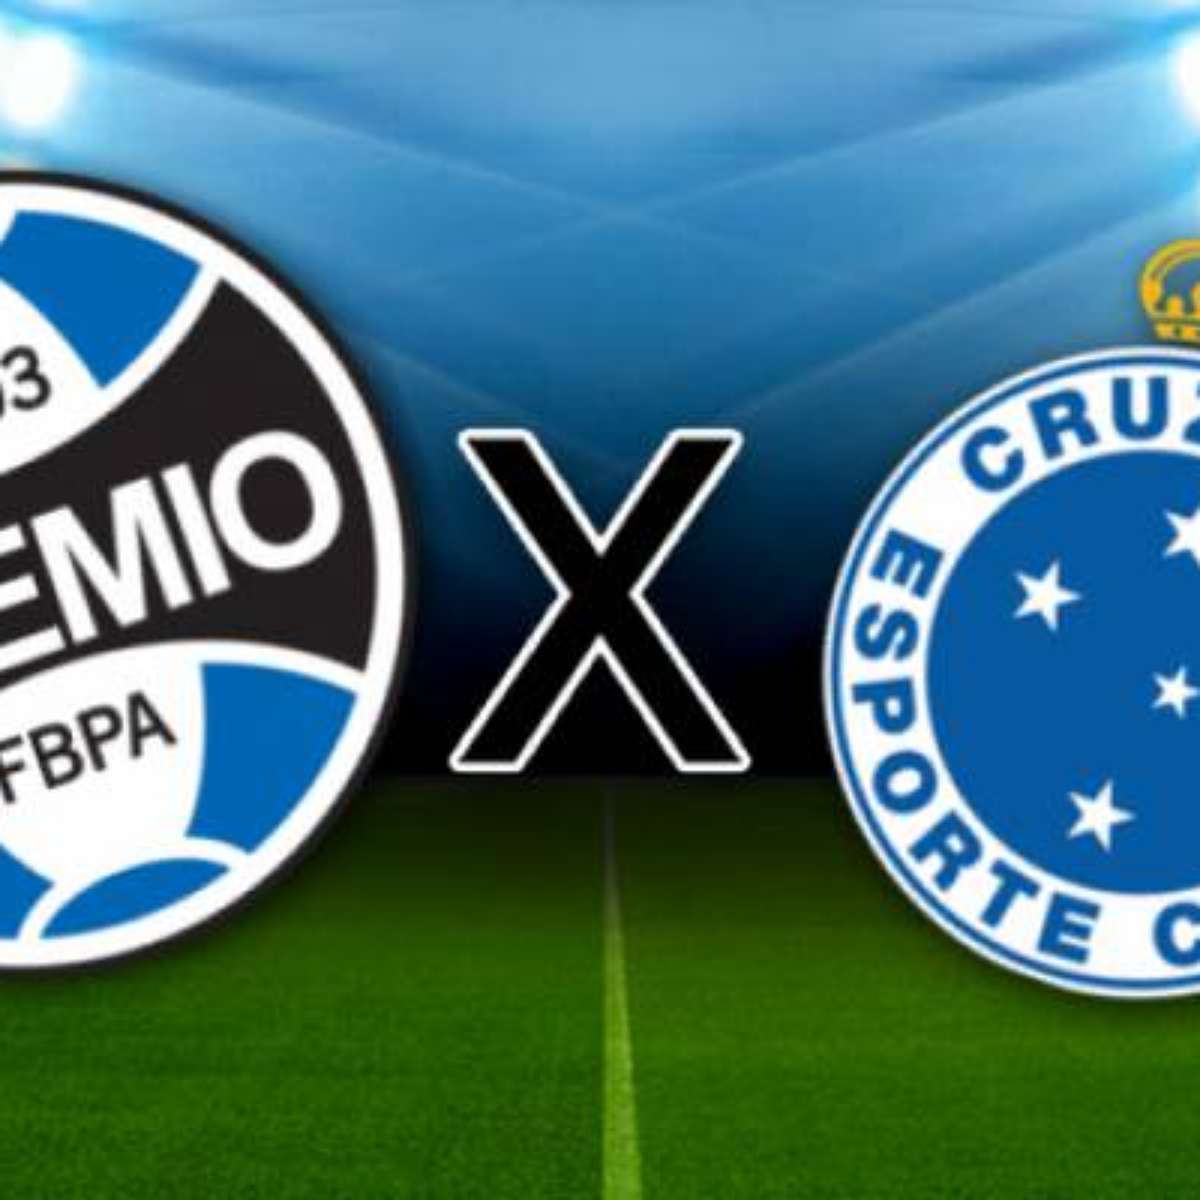 Cruzeiro vs. América MG: A Heated Rivalry in Brazilian Football